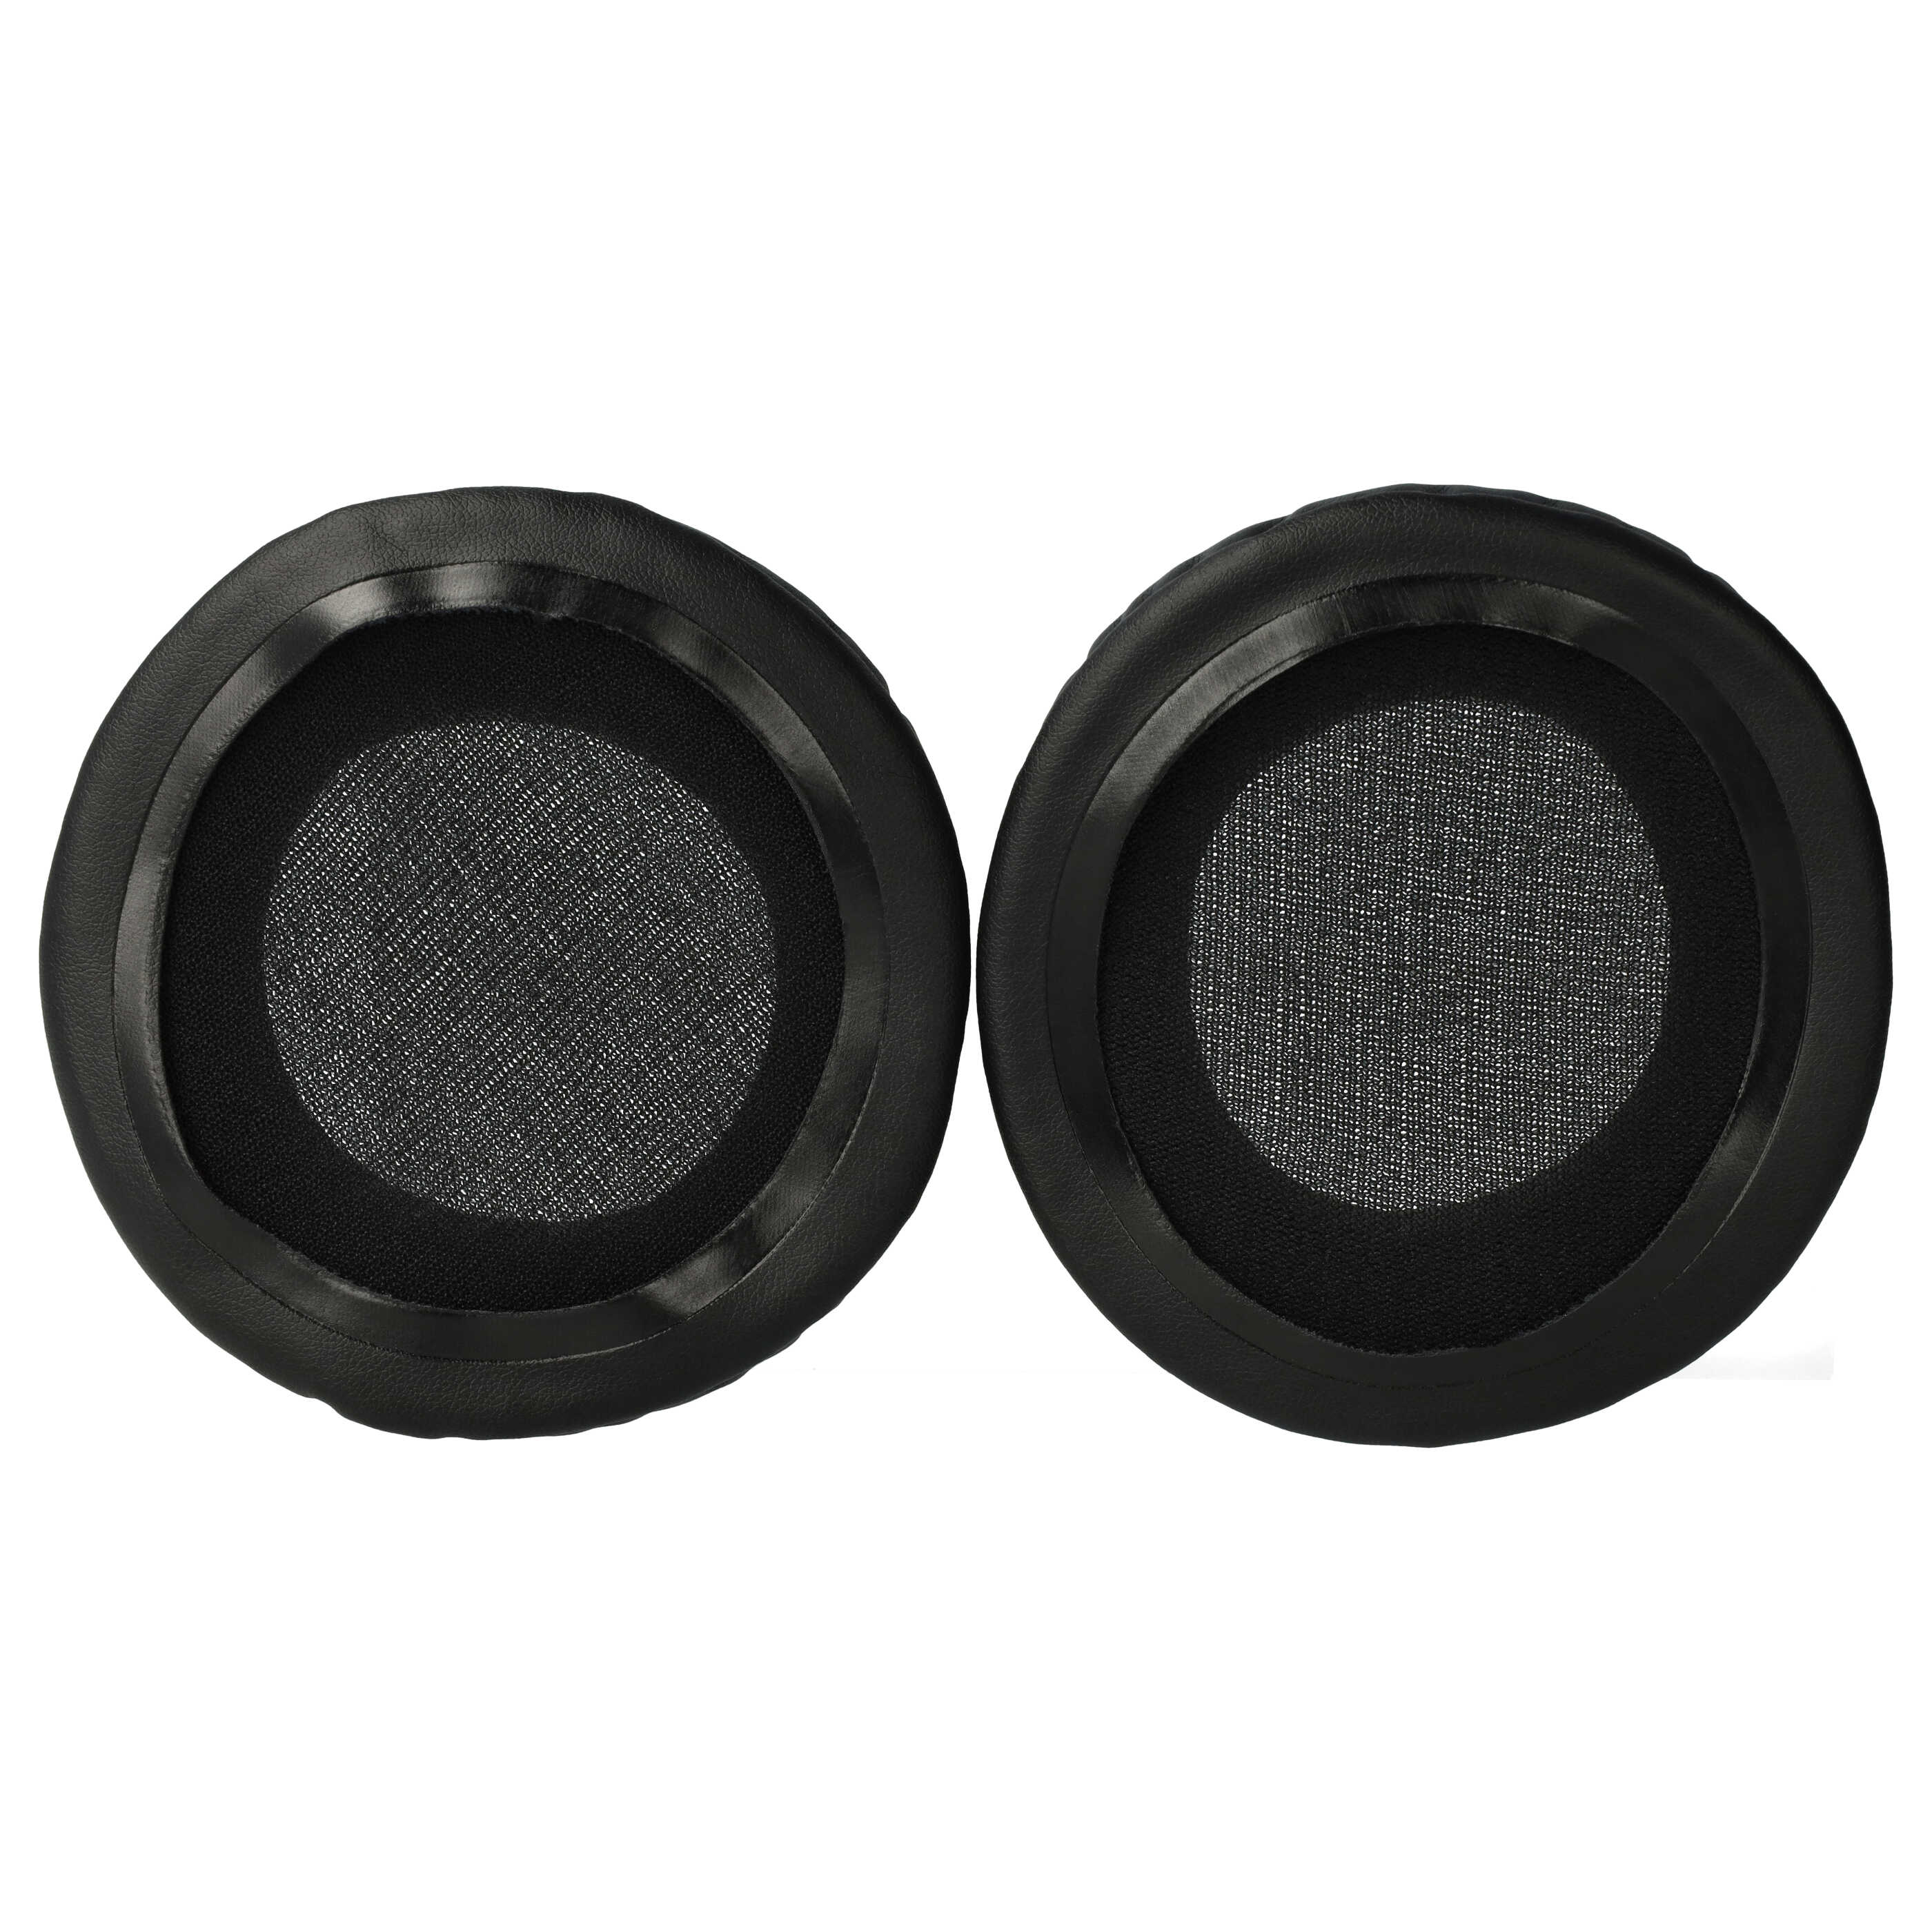 2x Ohrenpolster für Technics RP-DH1200 Kopfhörer u.a., 9,5 x 8,5 cm, Schwarz